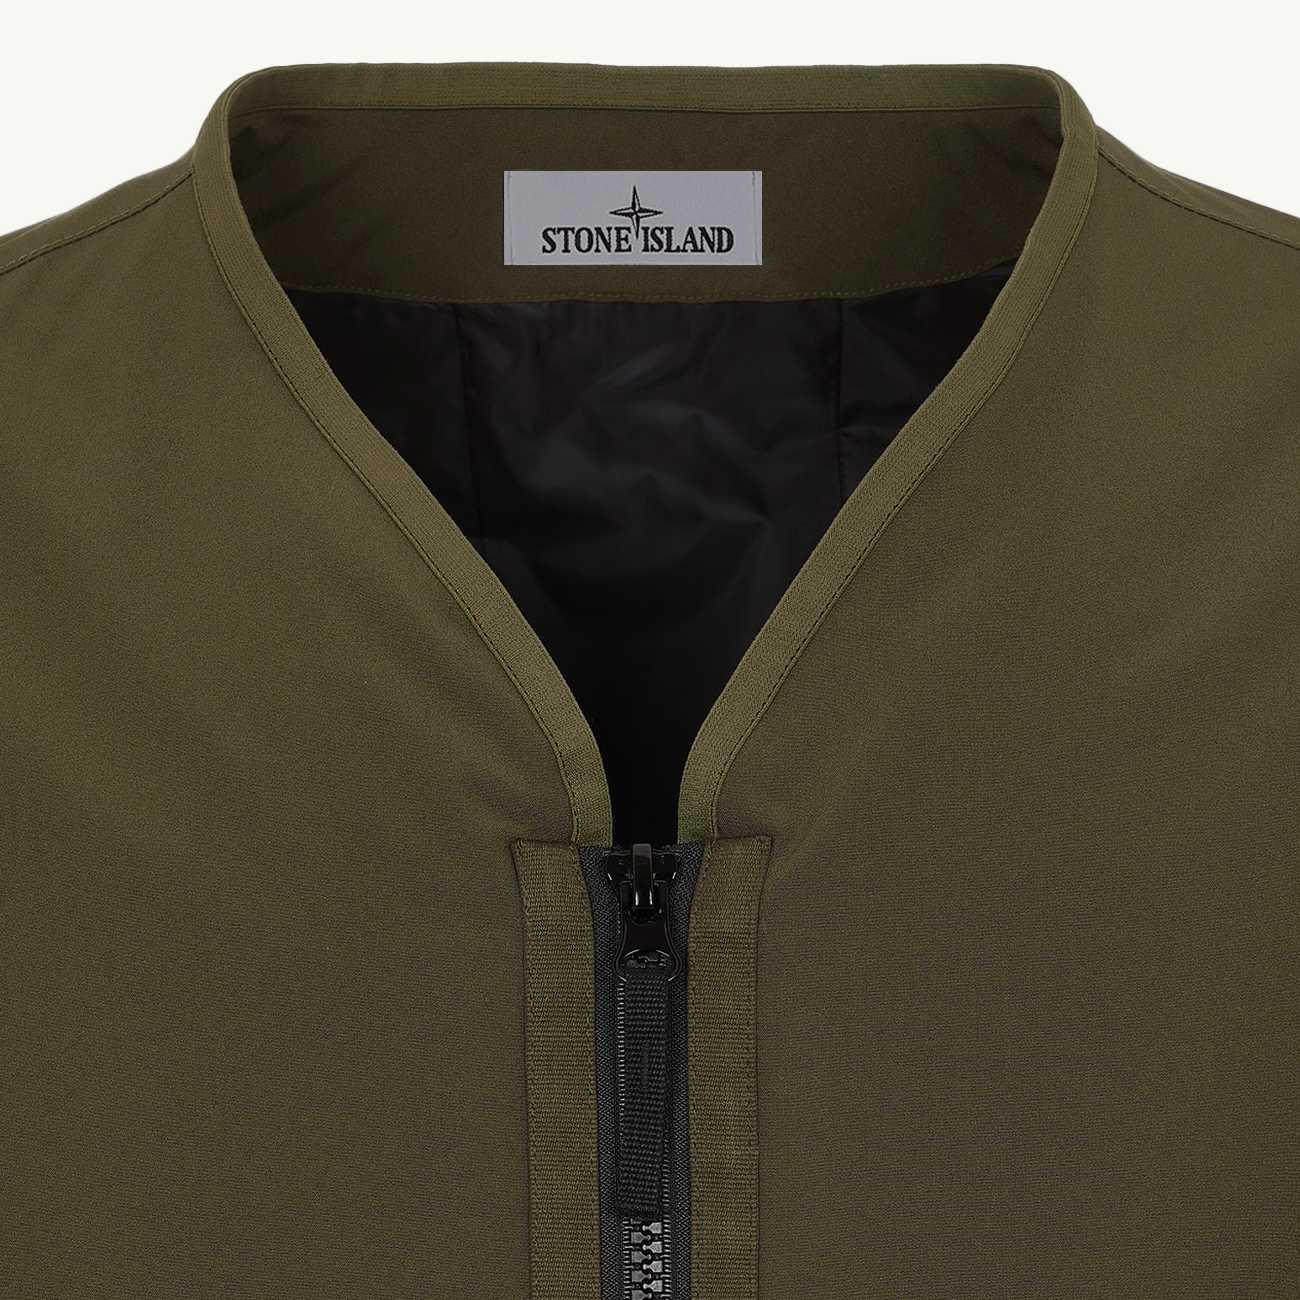 Jacket Collarless Zip Up - Olive Green 5879